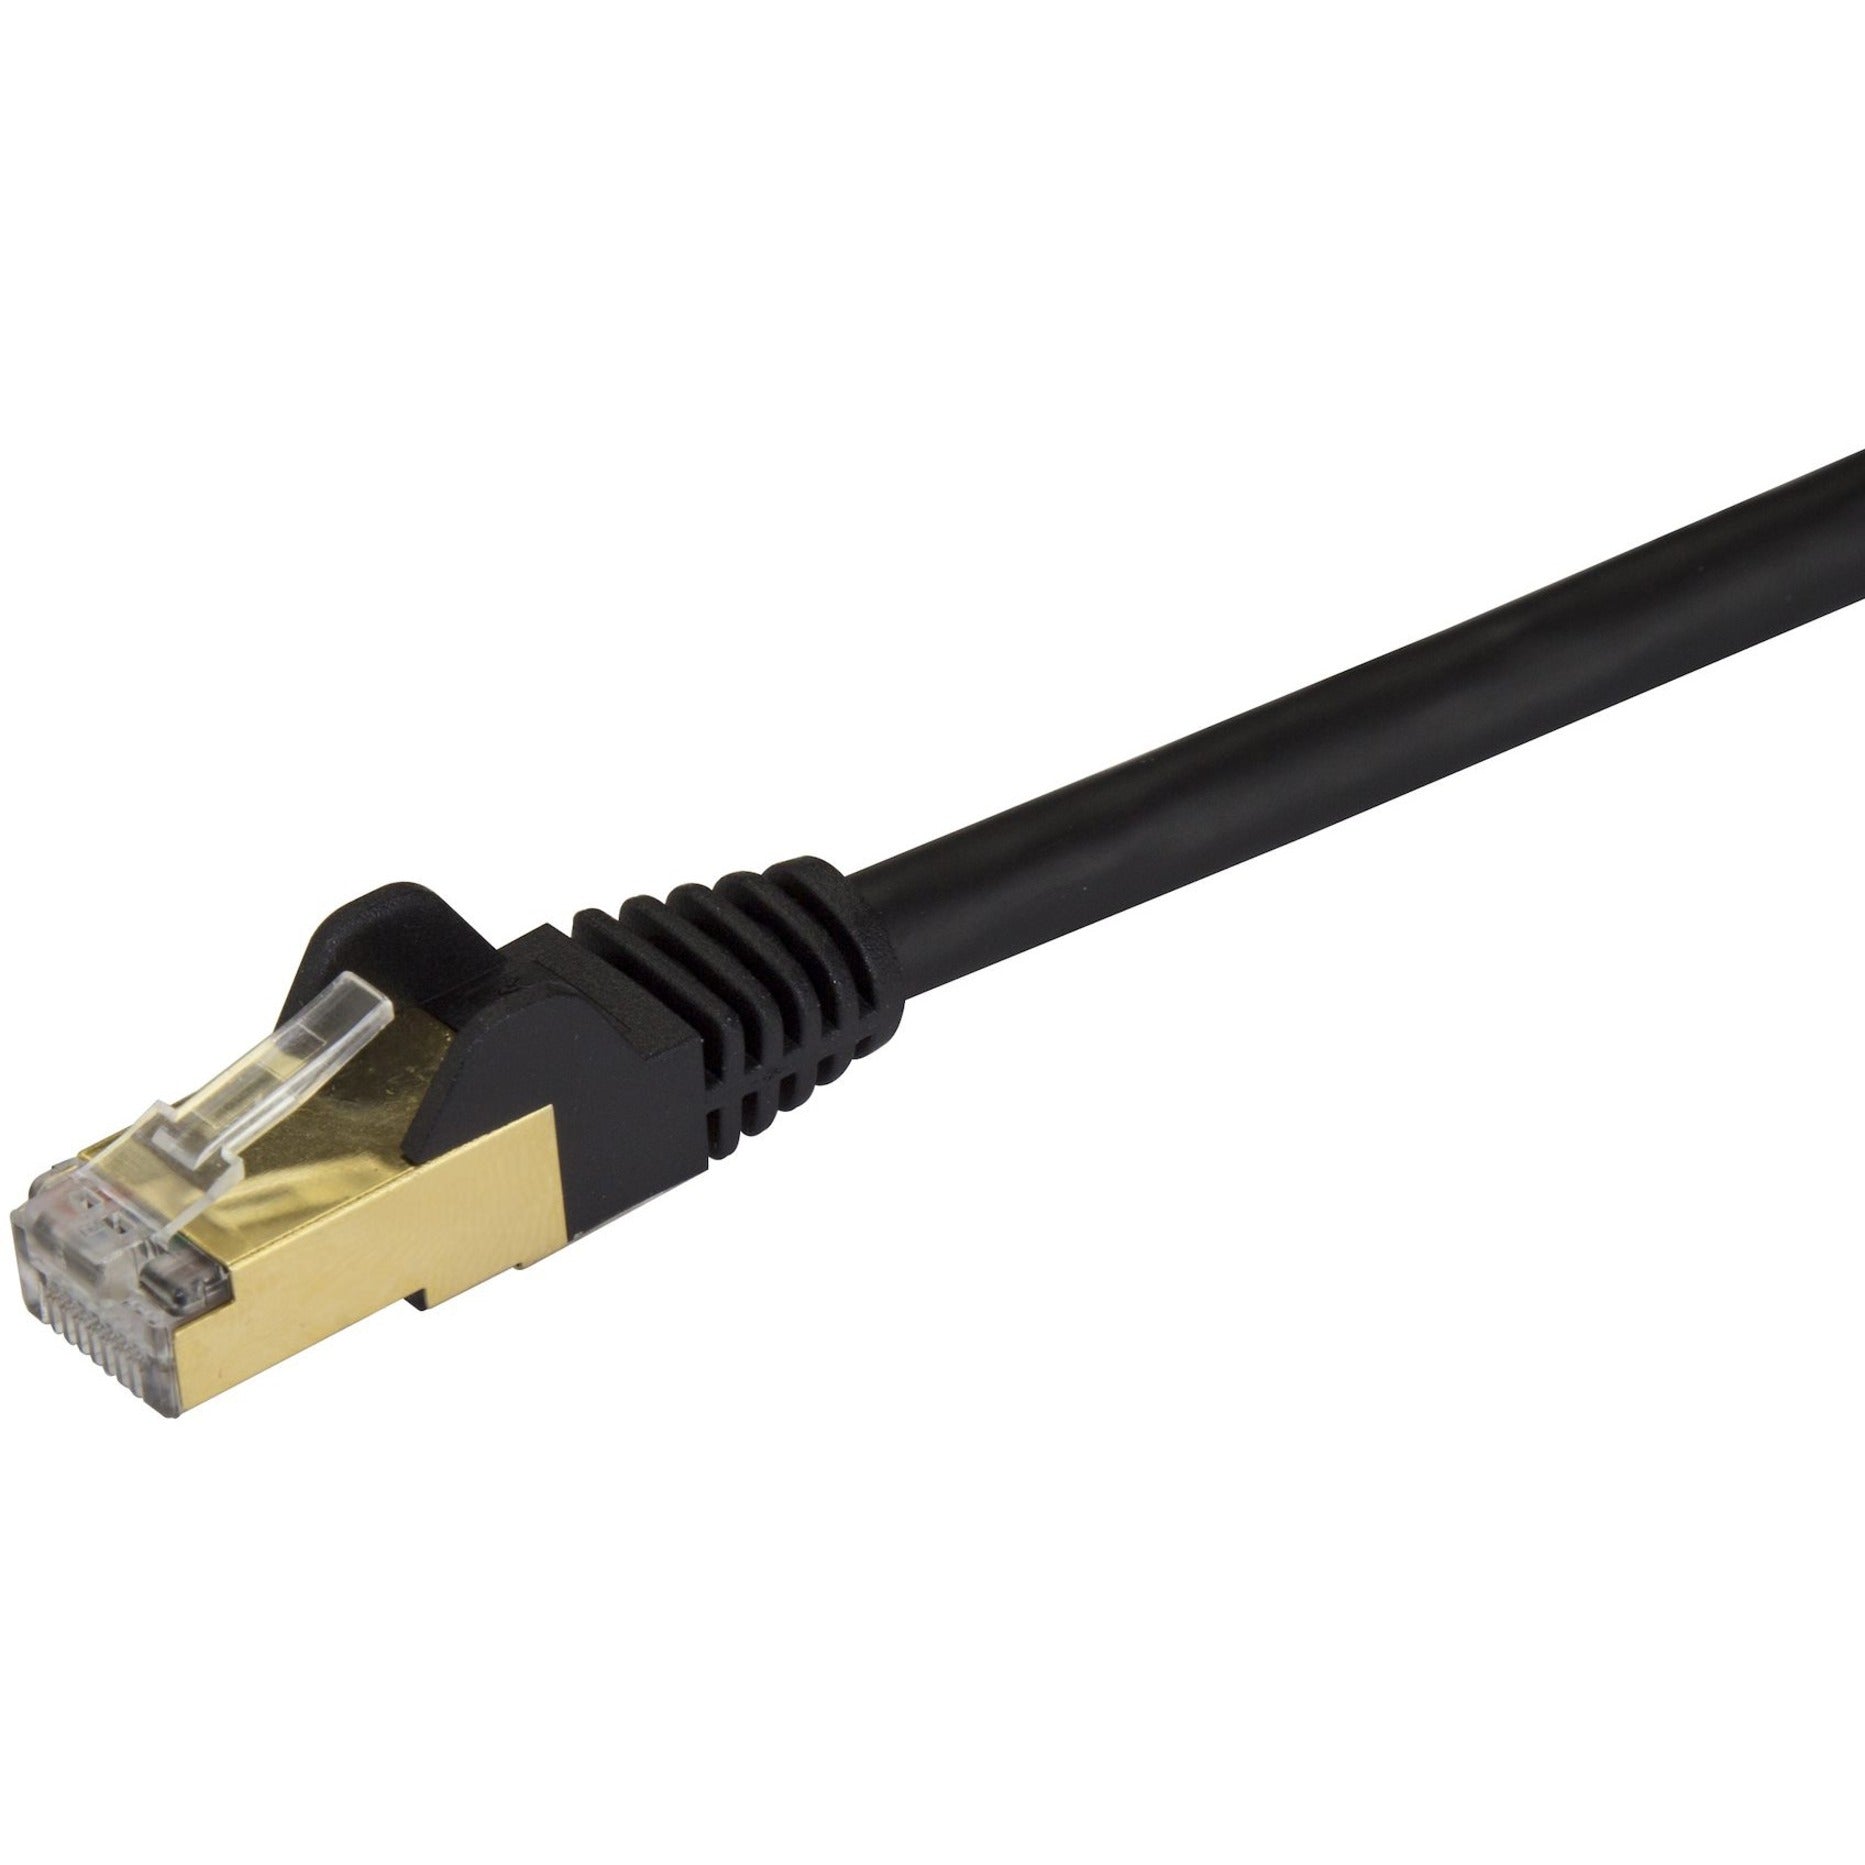 StarTech.com C6ASPAT2BK Cat6a Ethernet Patch Cable - Shielded (STP) - 2 ft., Black, Snagless RJ45 Ethernet Cord